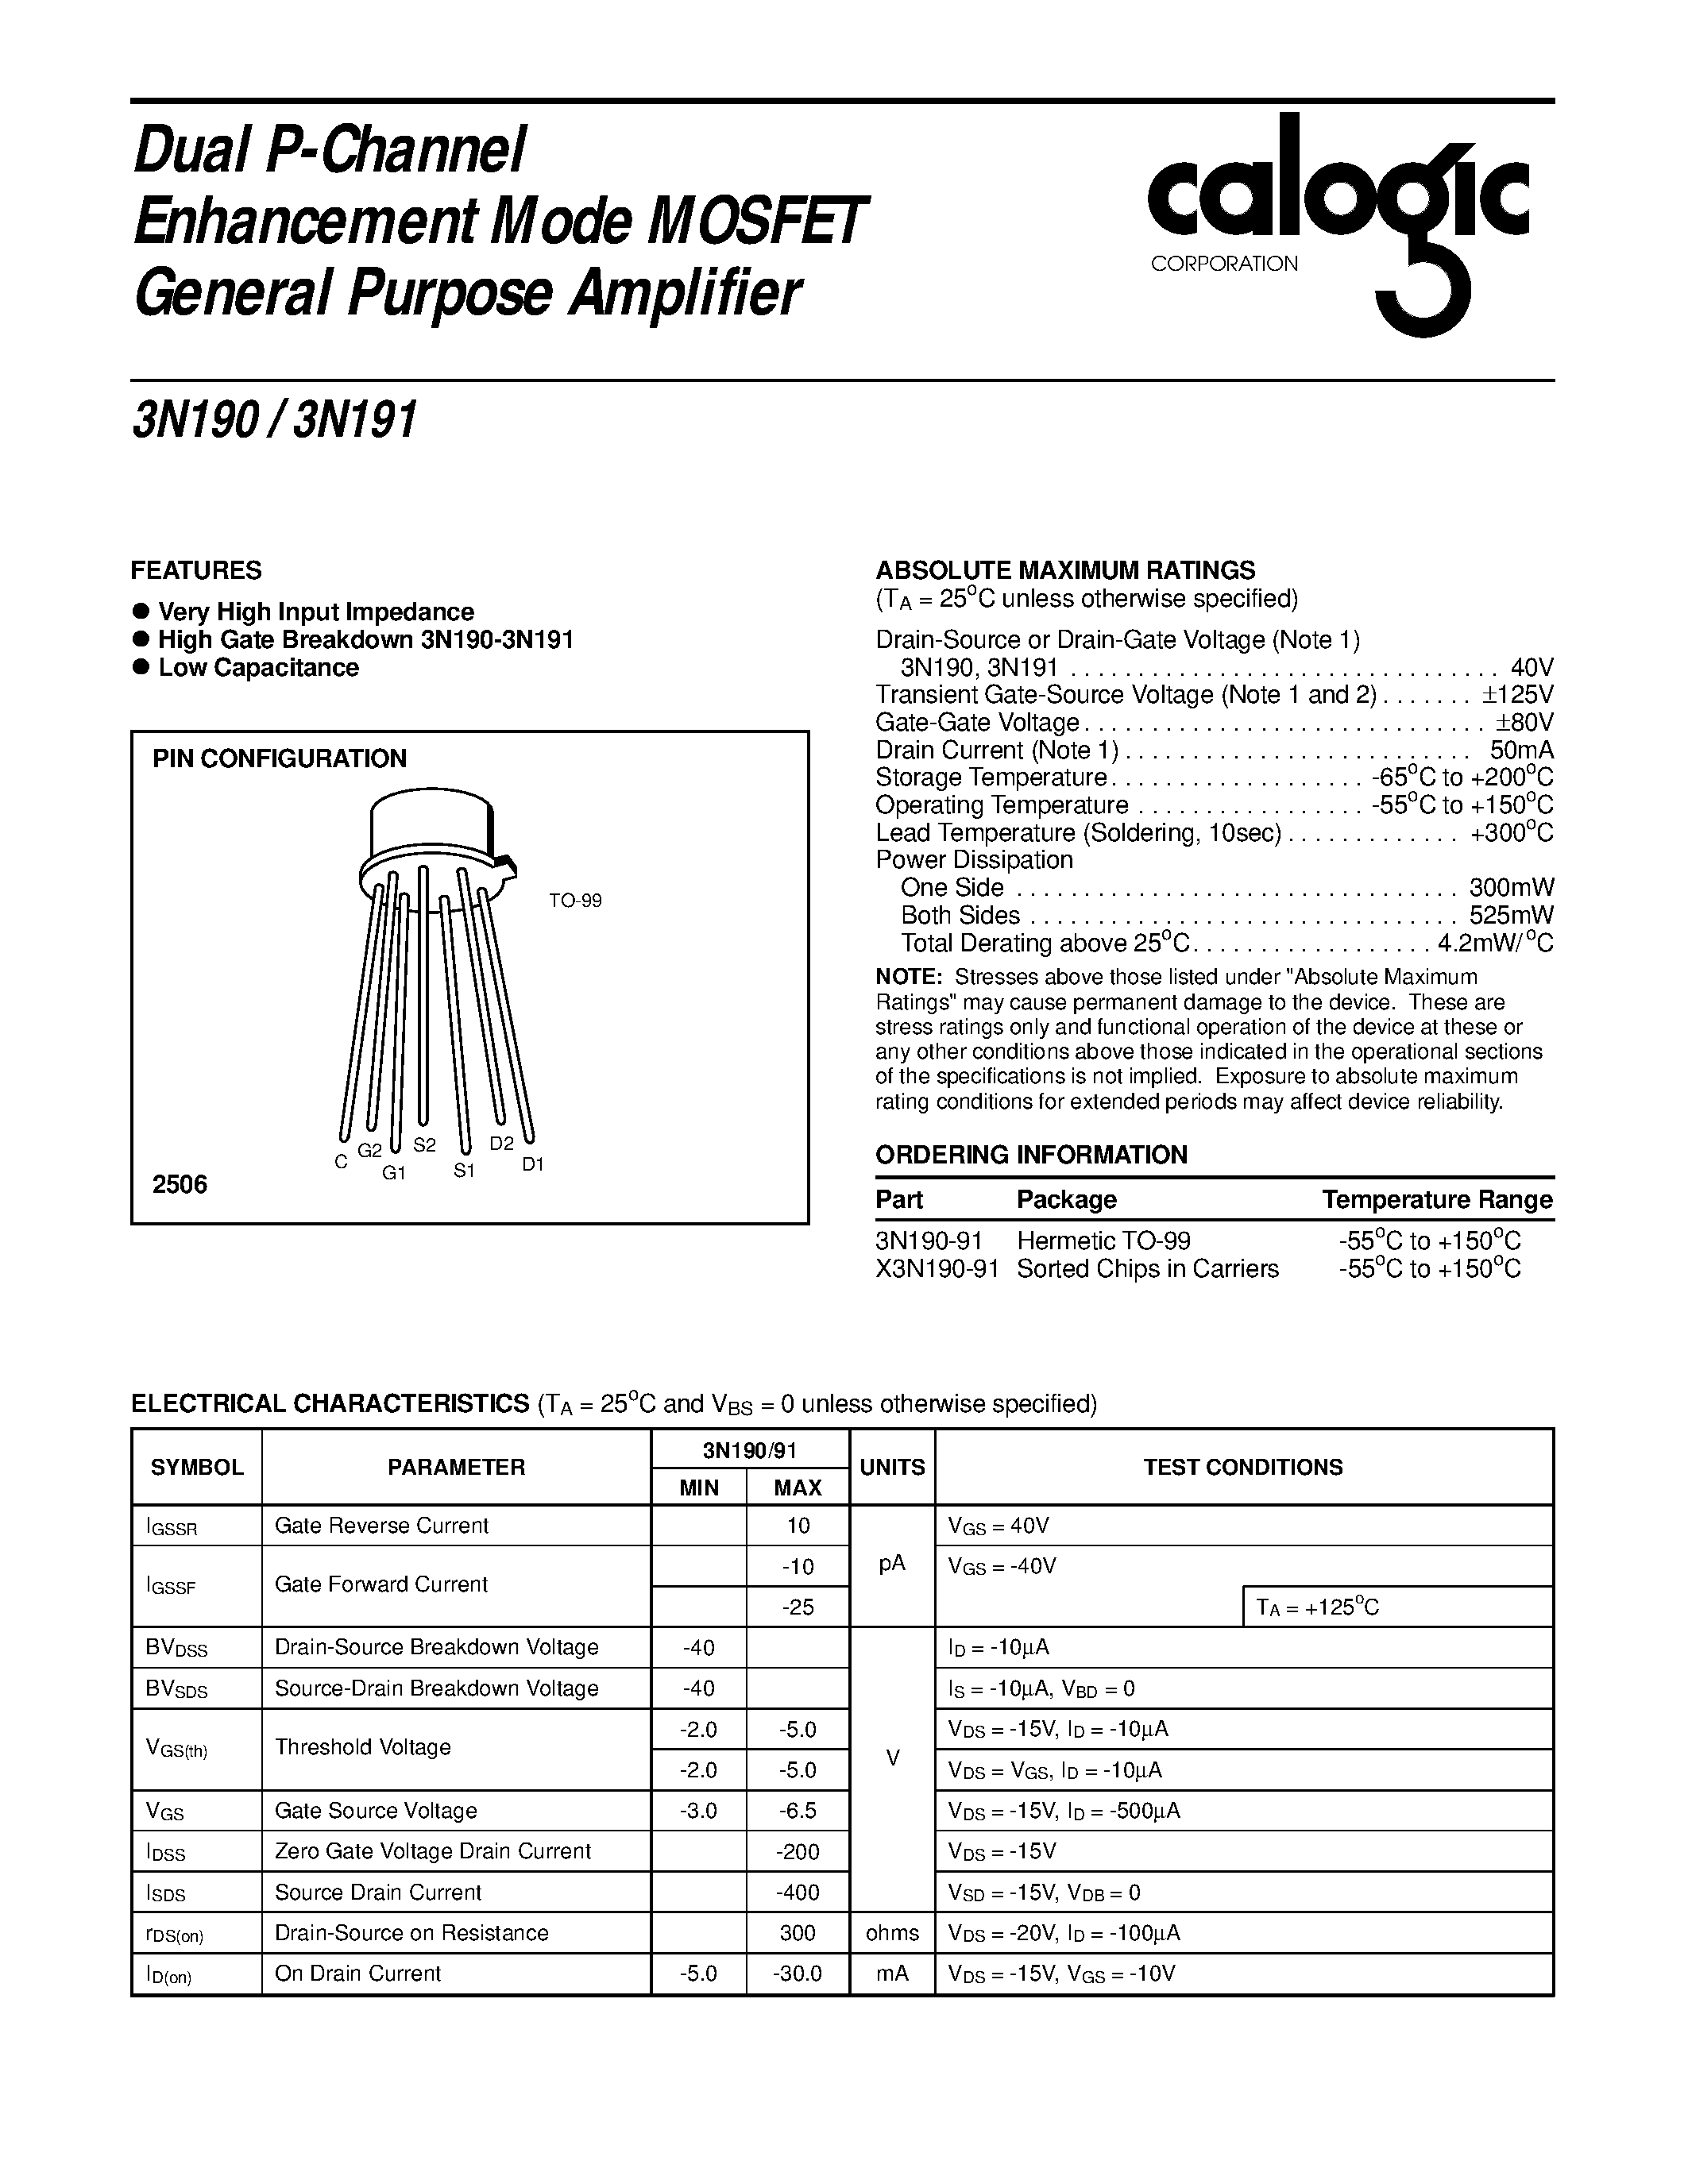 Datasheet X3N190-91 - Dual P-Channel Enhancement Mode MOSFET General Purpose Amplifier page 1